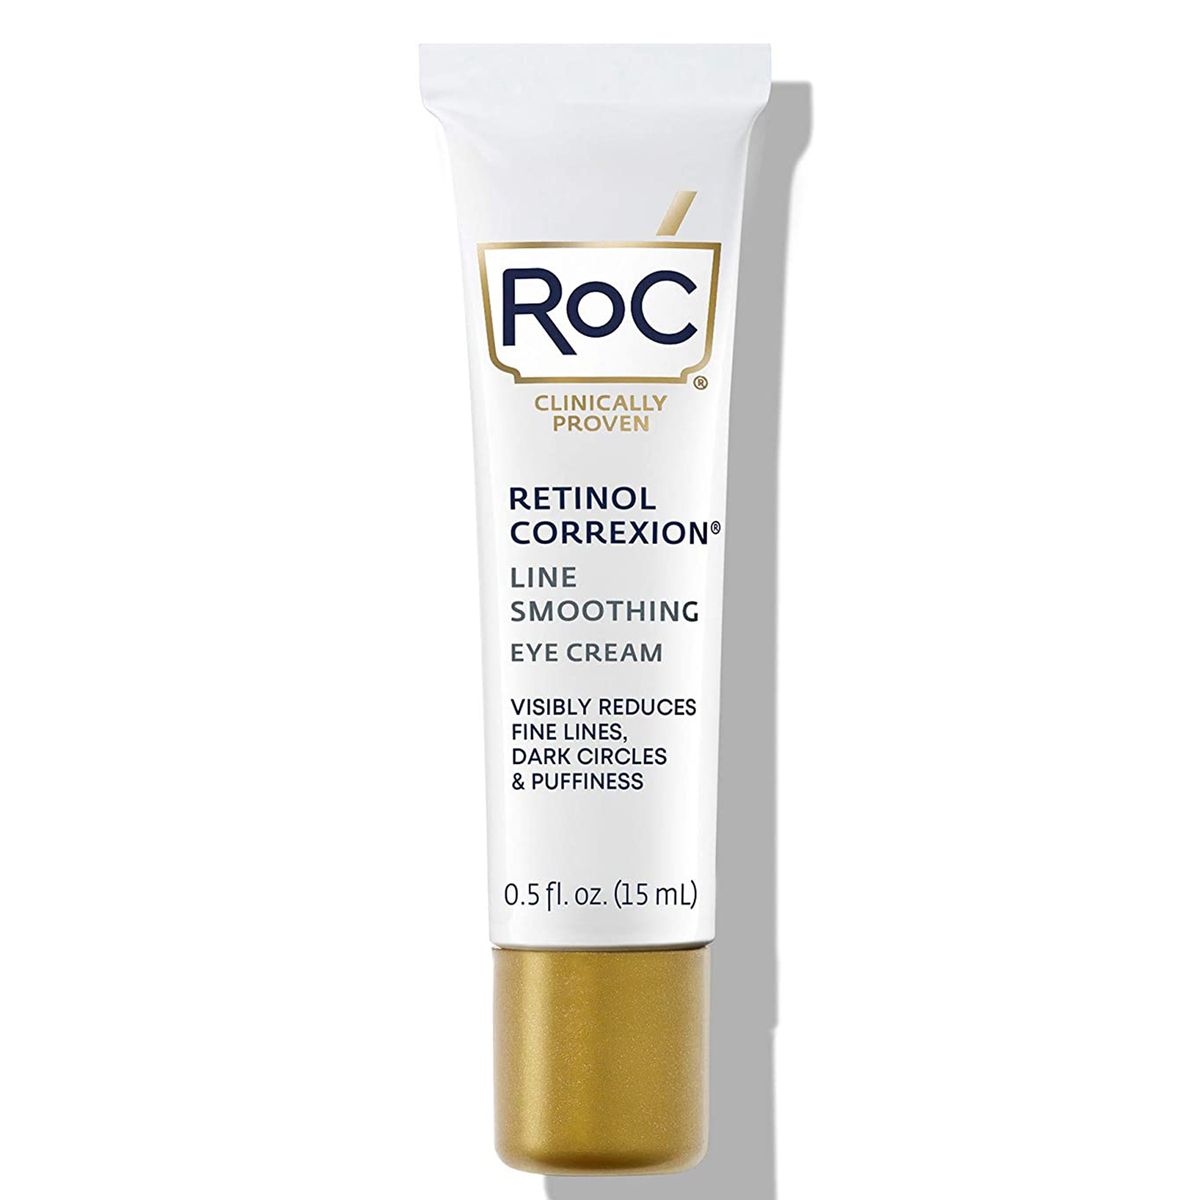 RoC Retinol Correxion Line Smoothing Anti-Aging Retinol Eye Cream for Dark Circles and Puffy Eyes